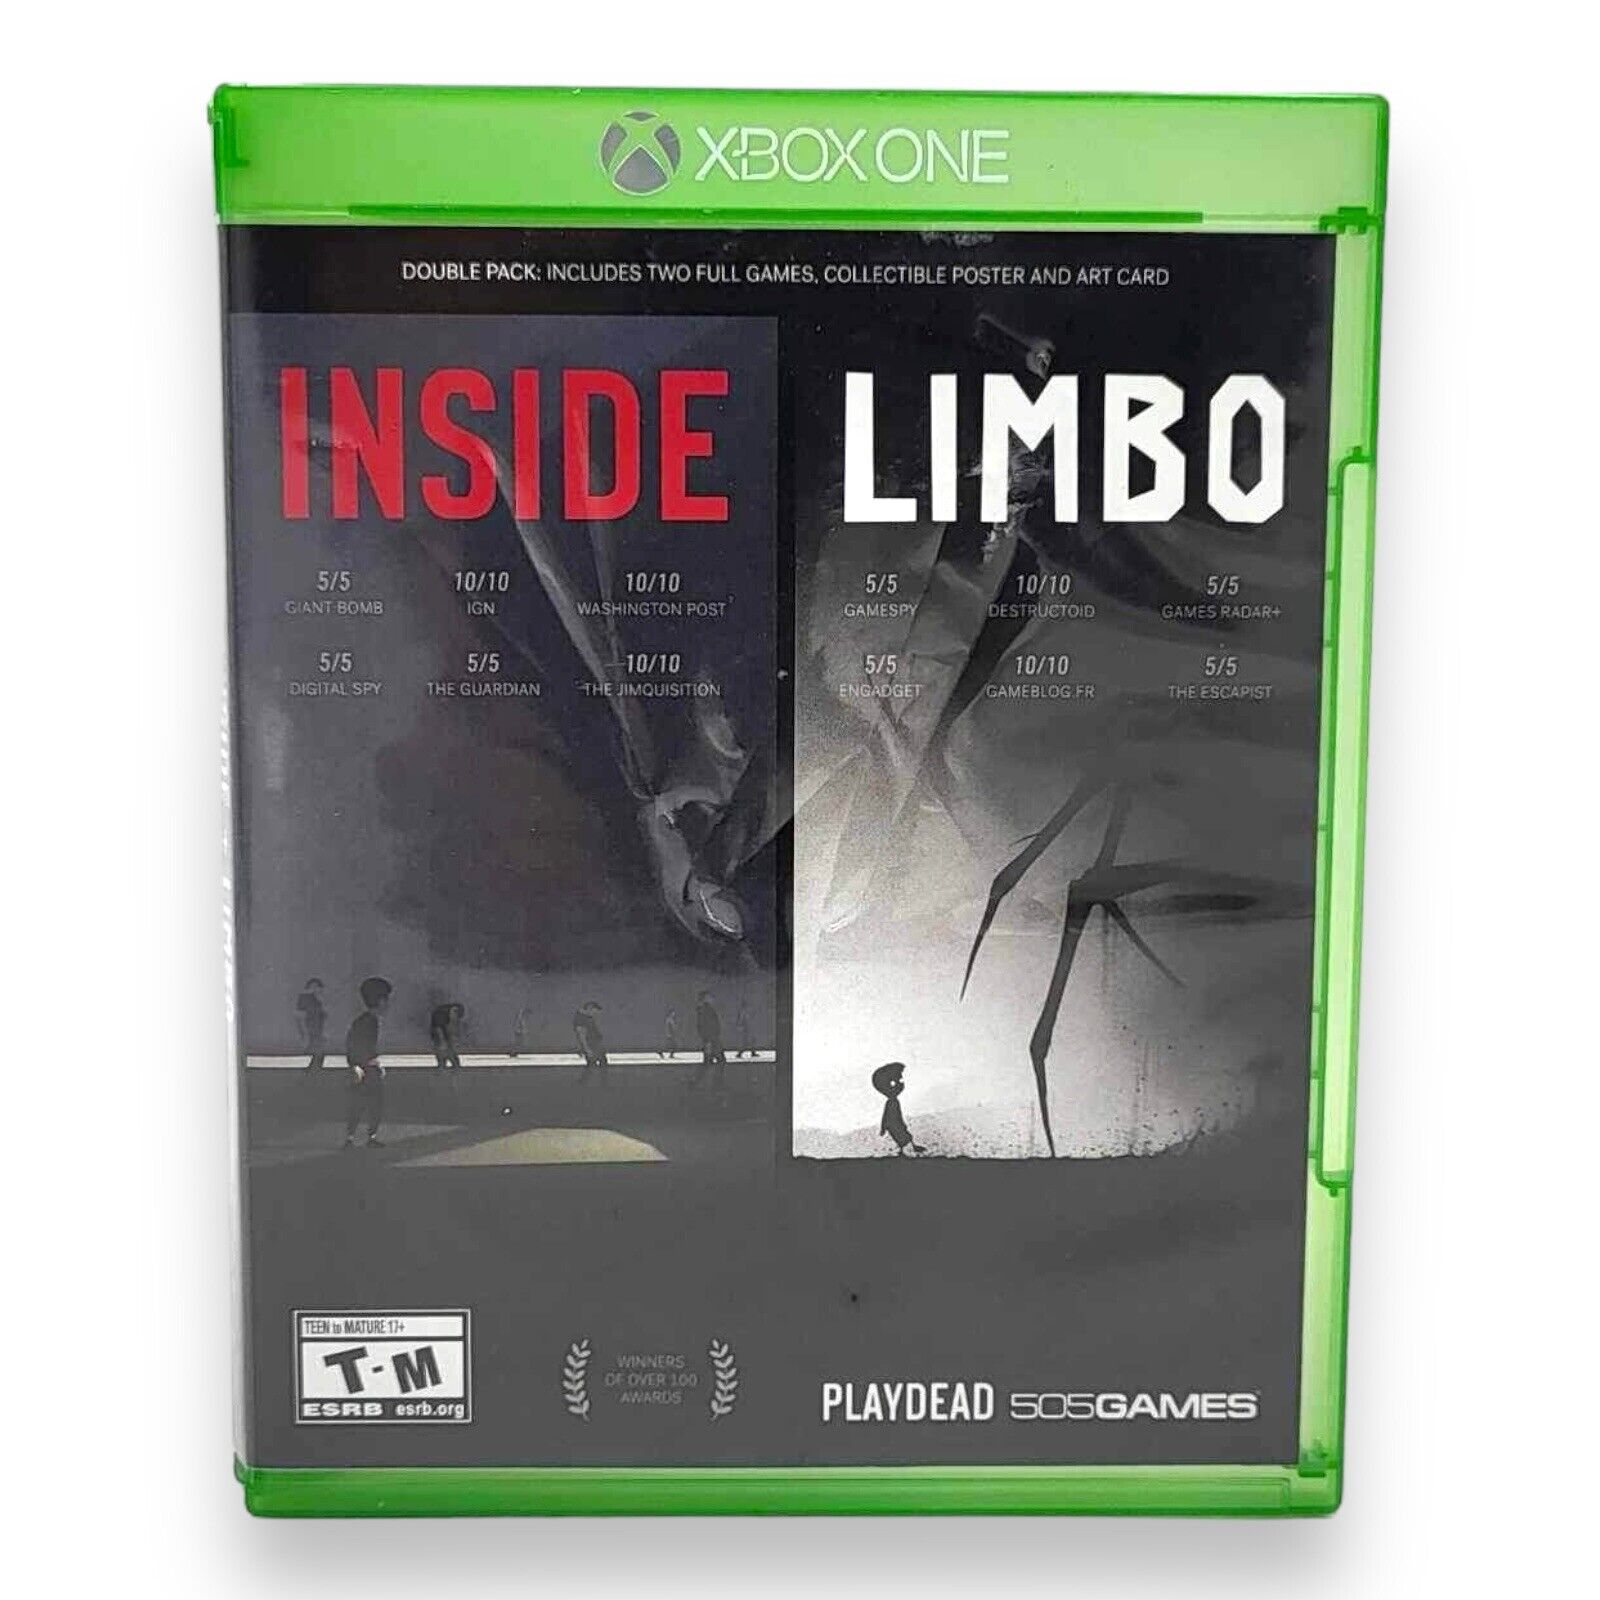 Inside + Limbo Playdead Adventure Pack CIB (Microsoft Xbox Series X/S Xbox One)